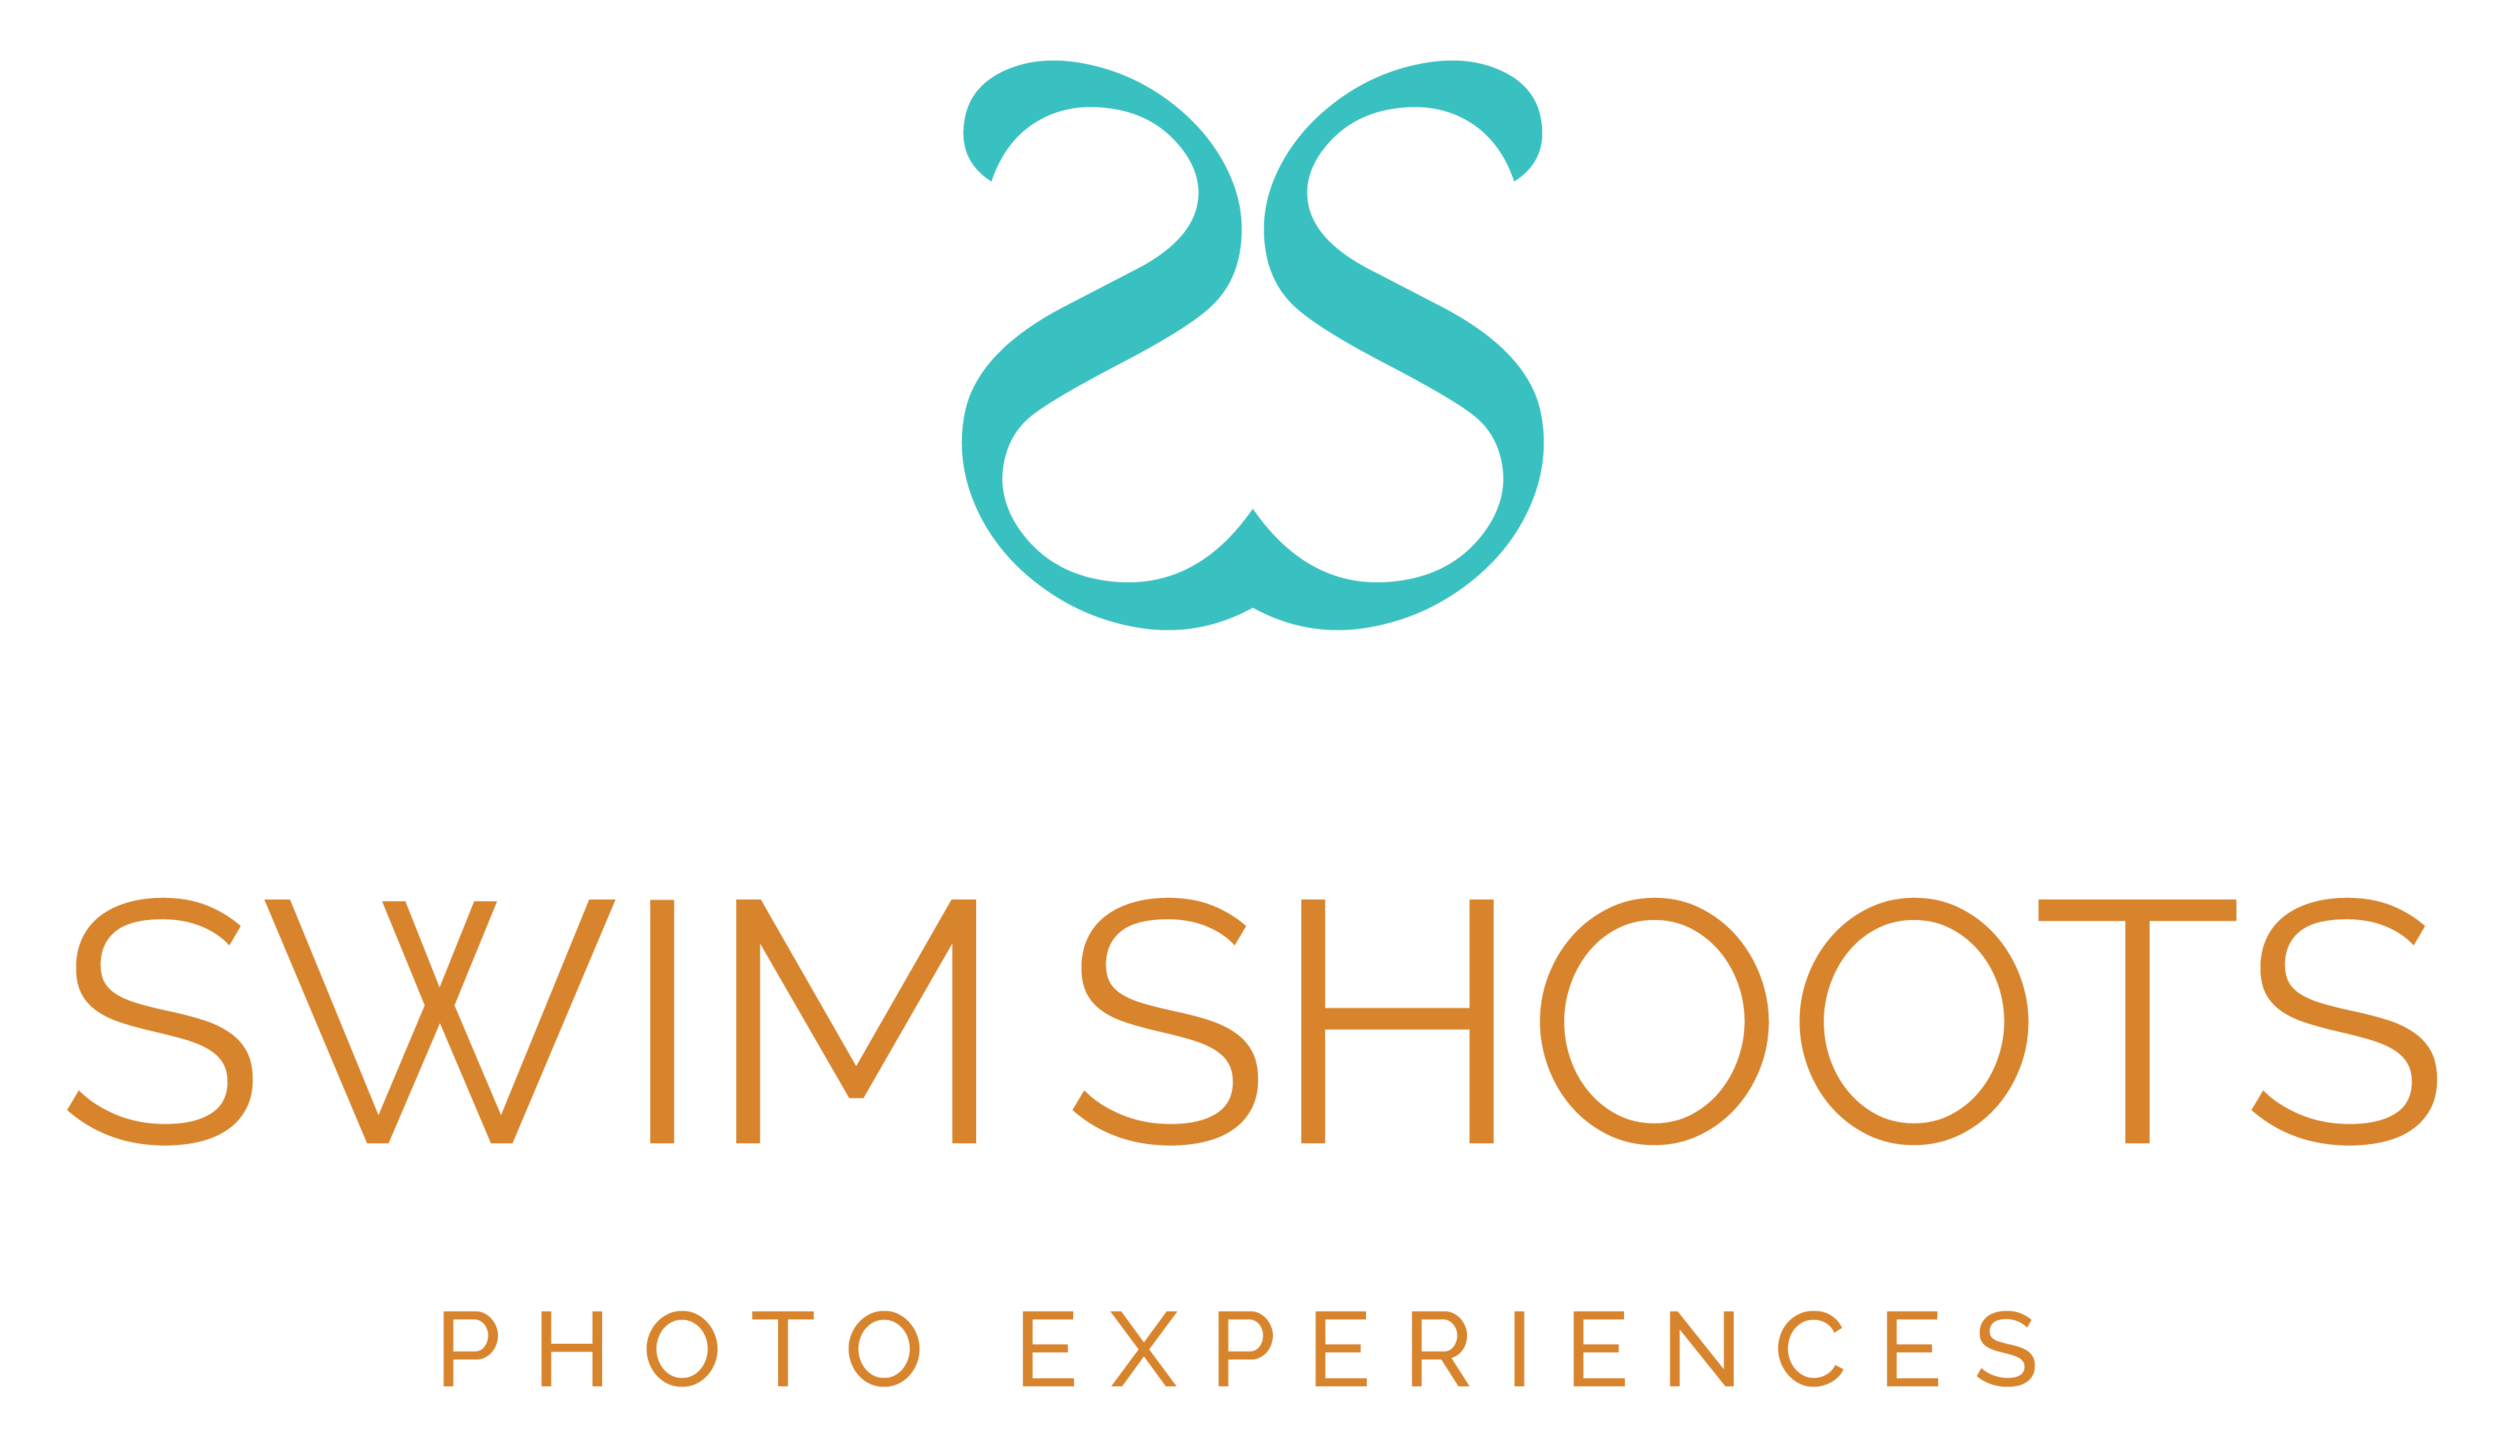 Swim Shoots Photo Experiences